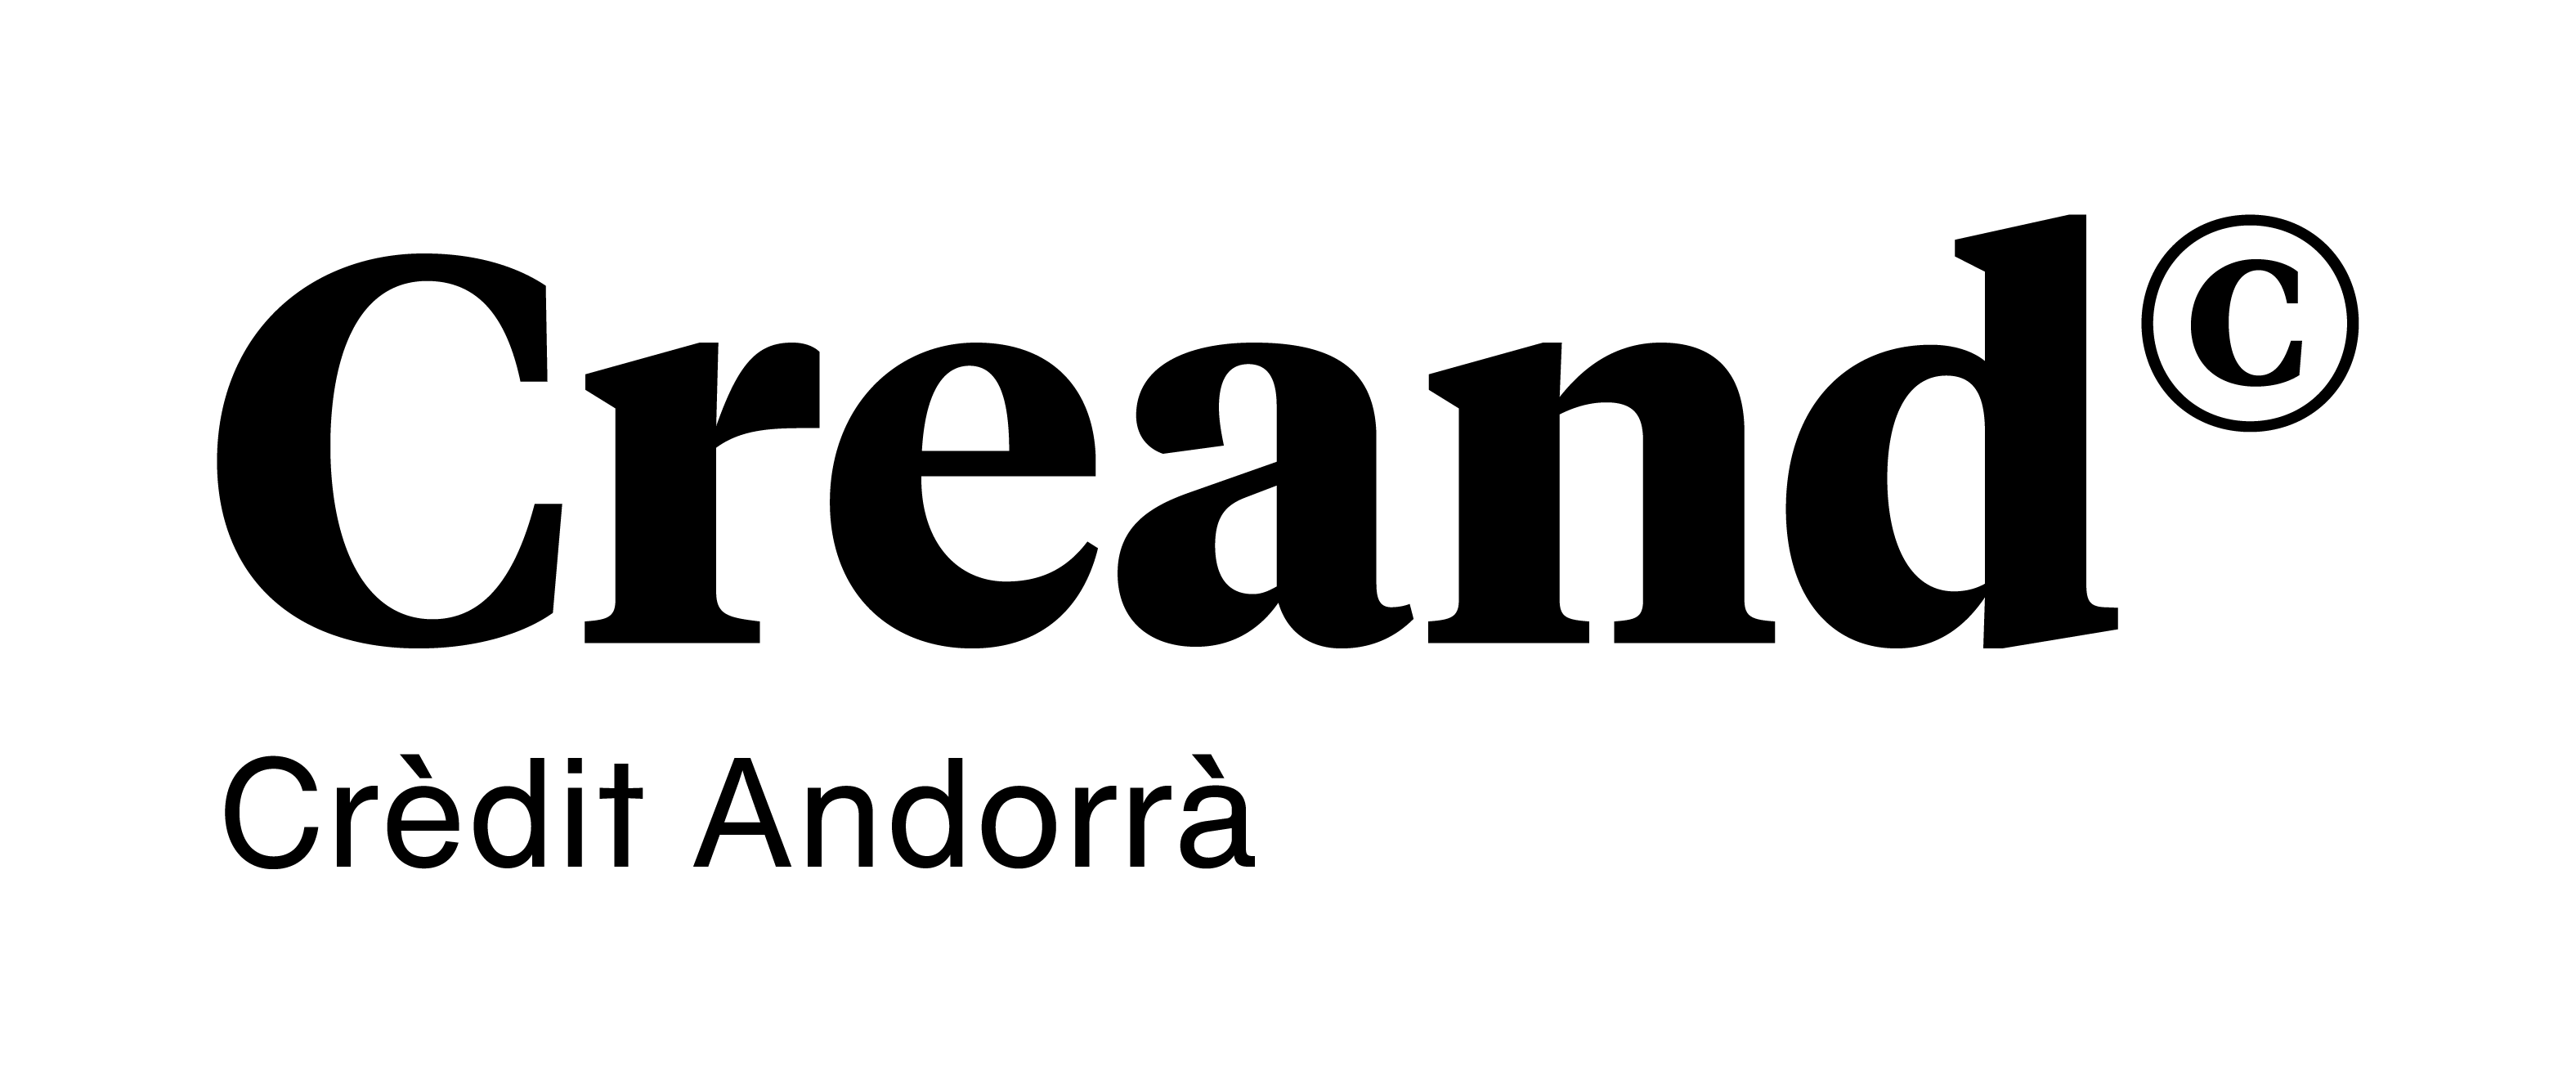 Nou logo Creand color negre illa Carlemany